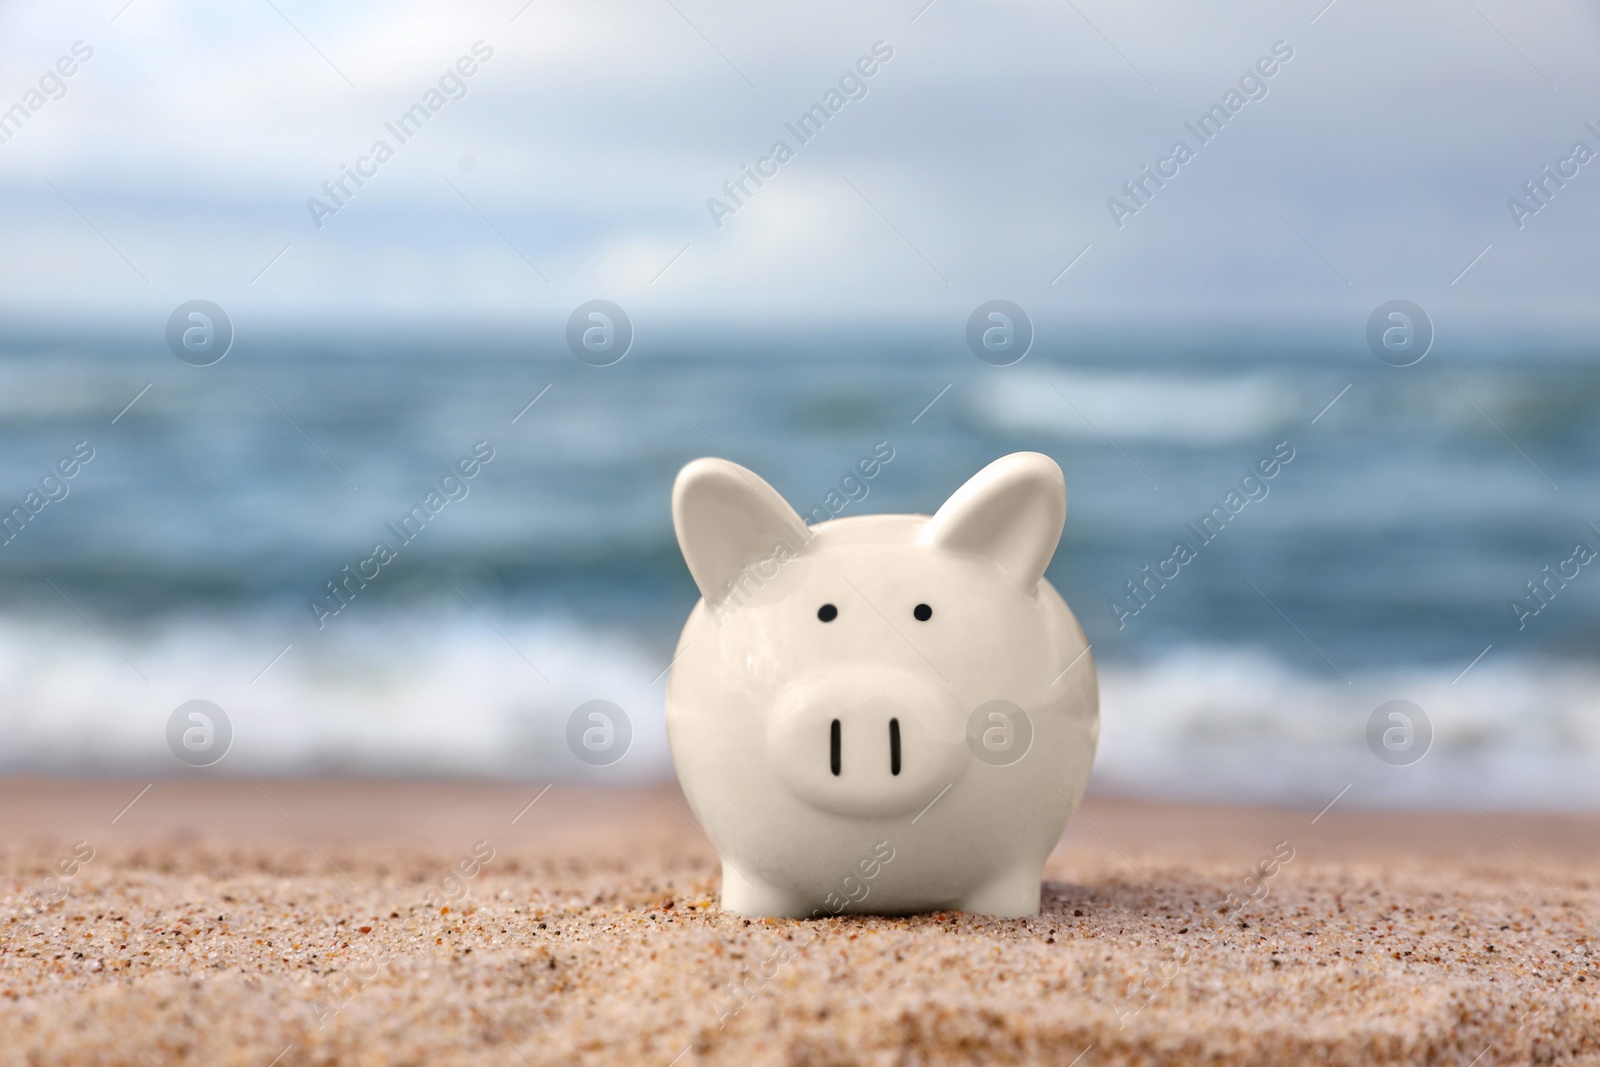 Photo of Cute piggy bank on sand near sea